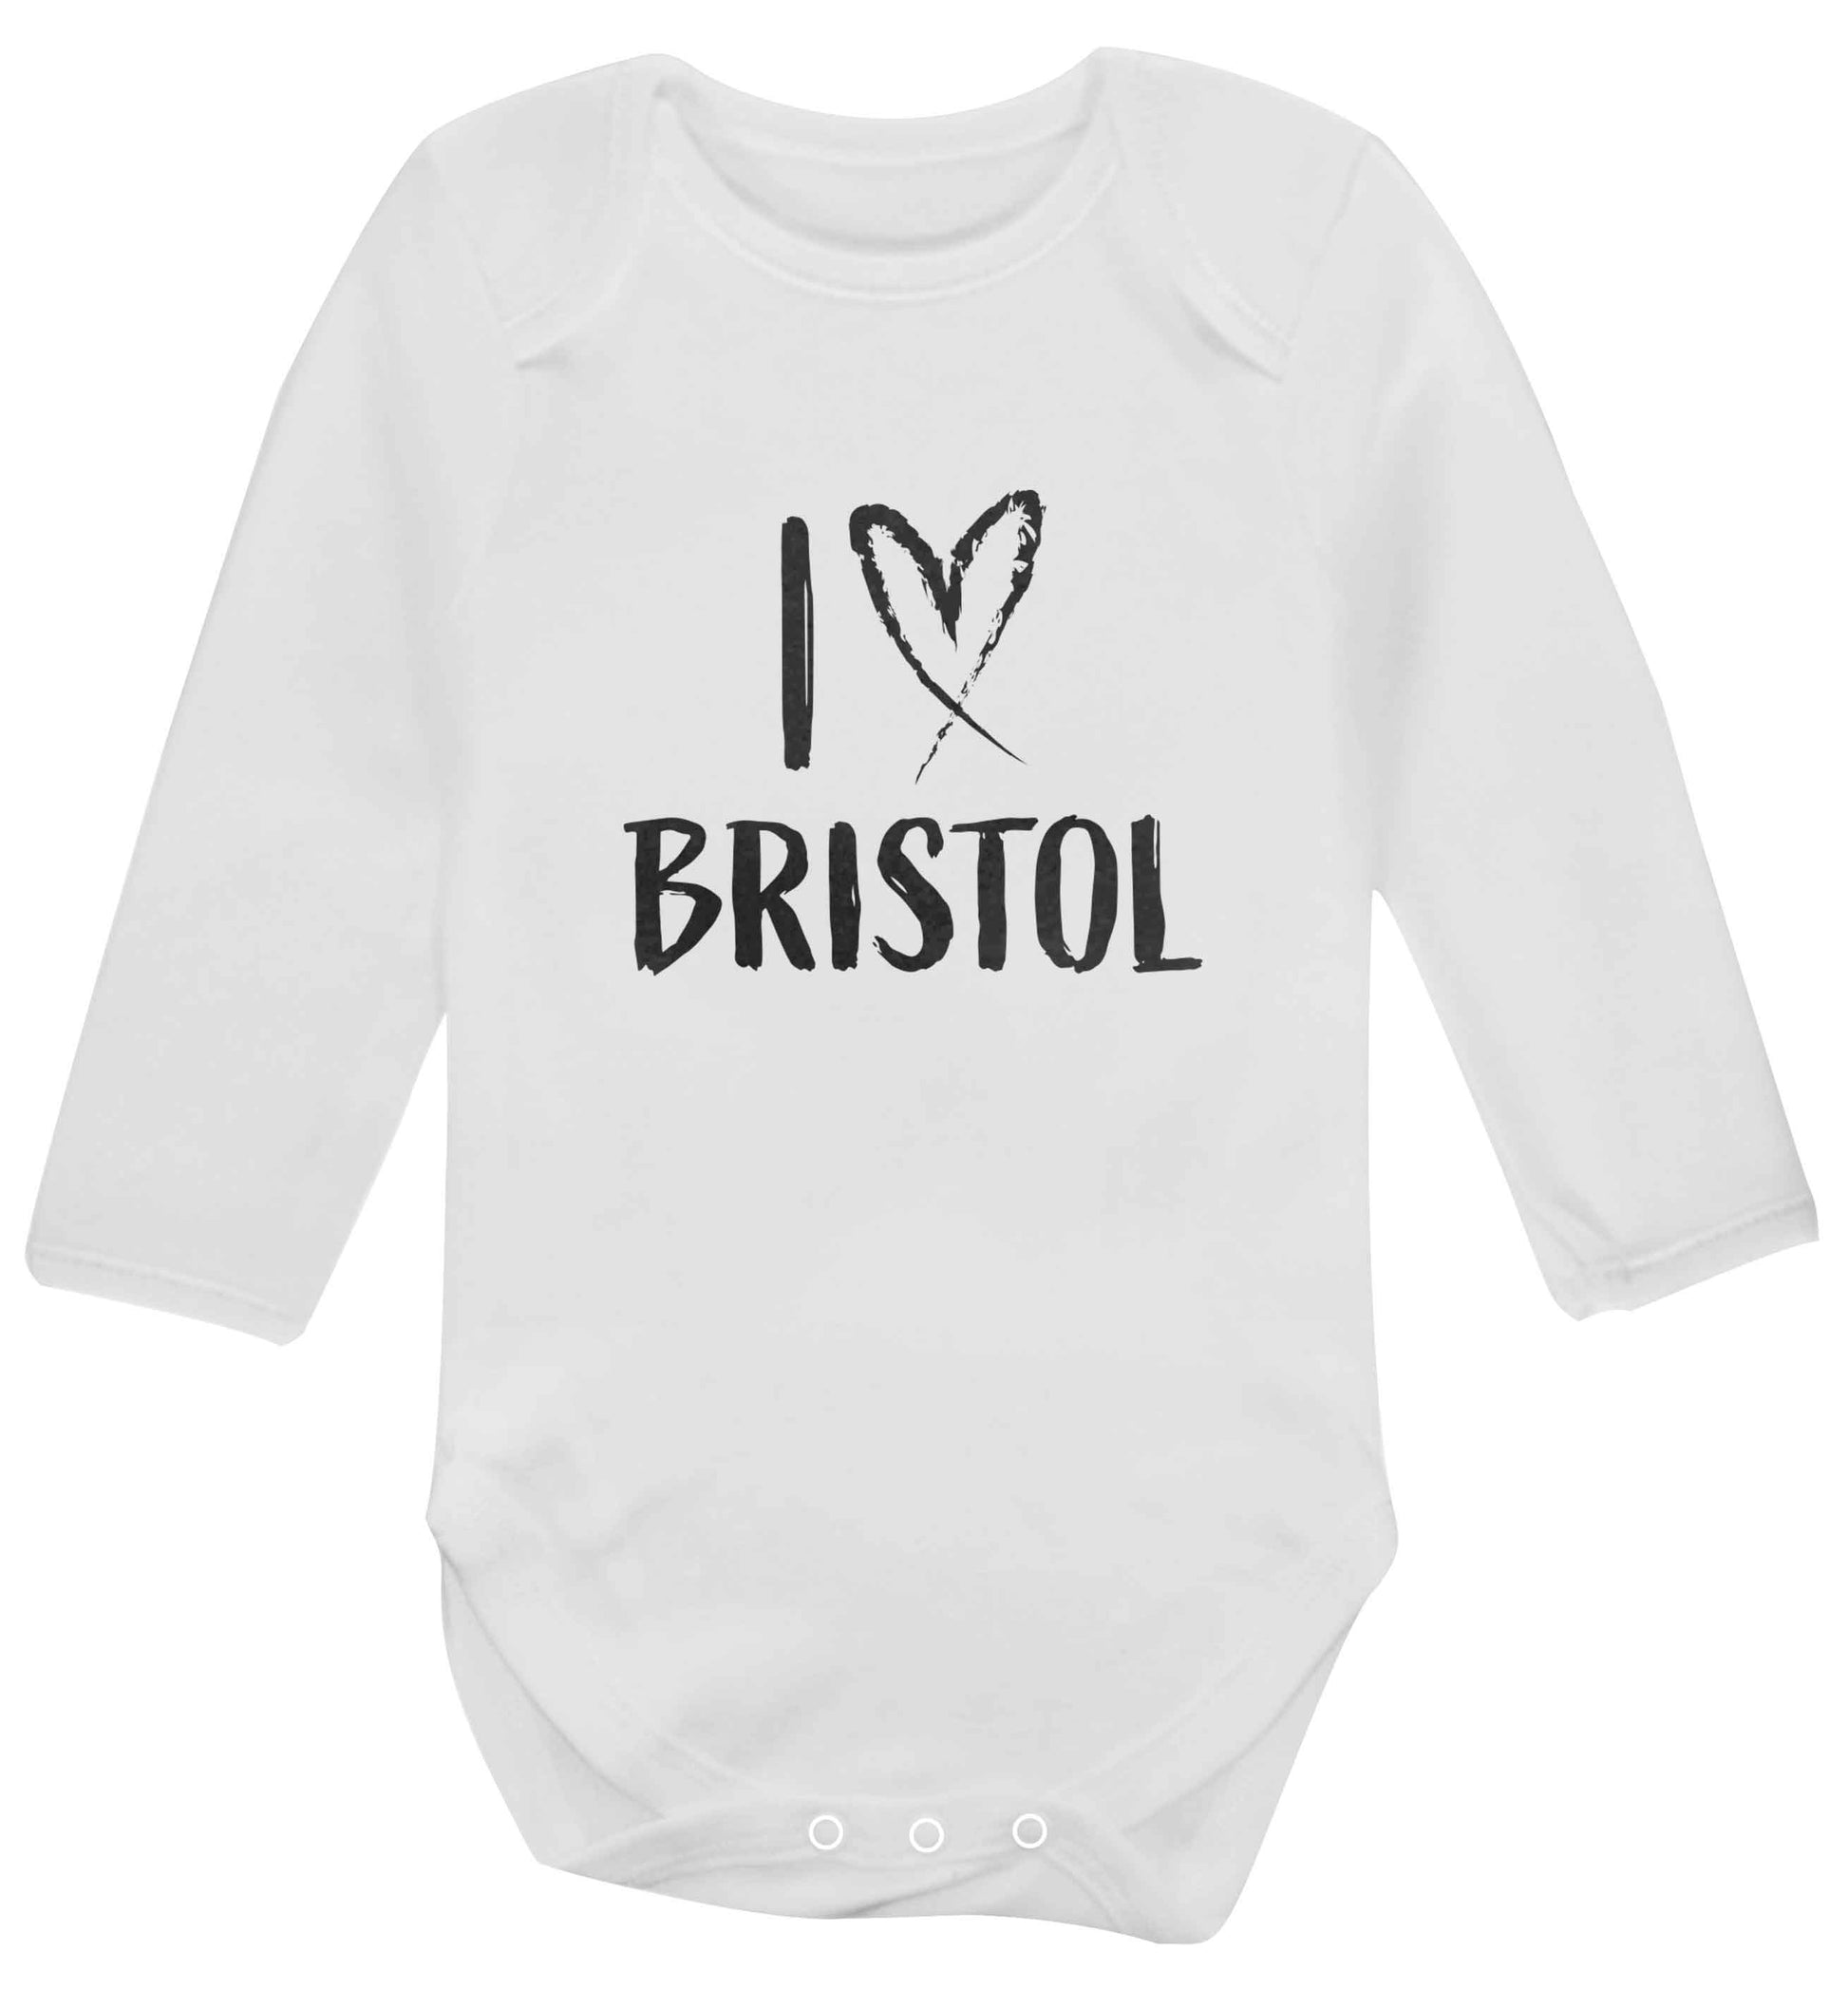 I love Bristol baby vest long sleeved white 6-12 months